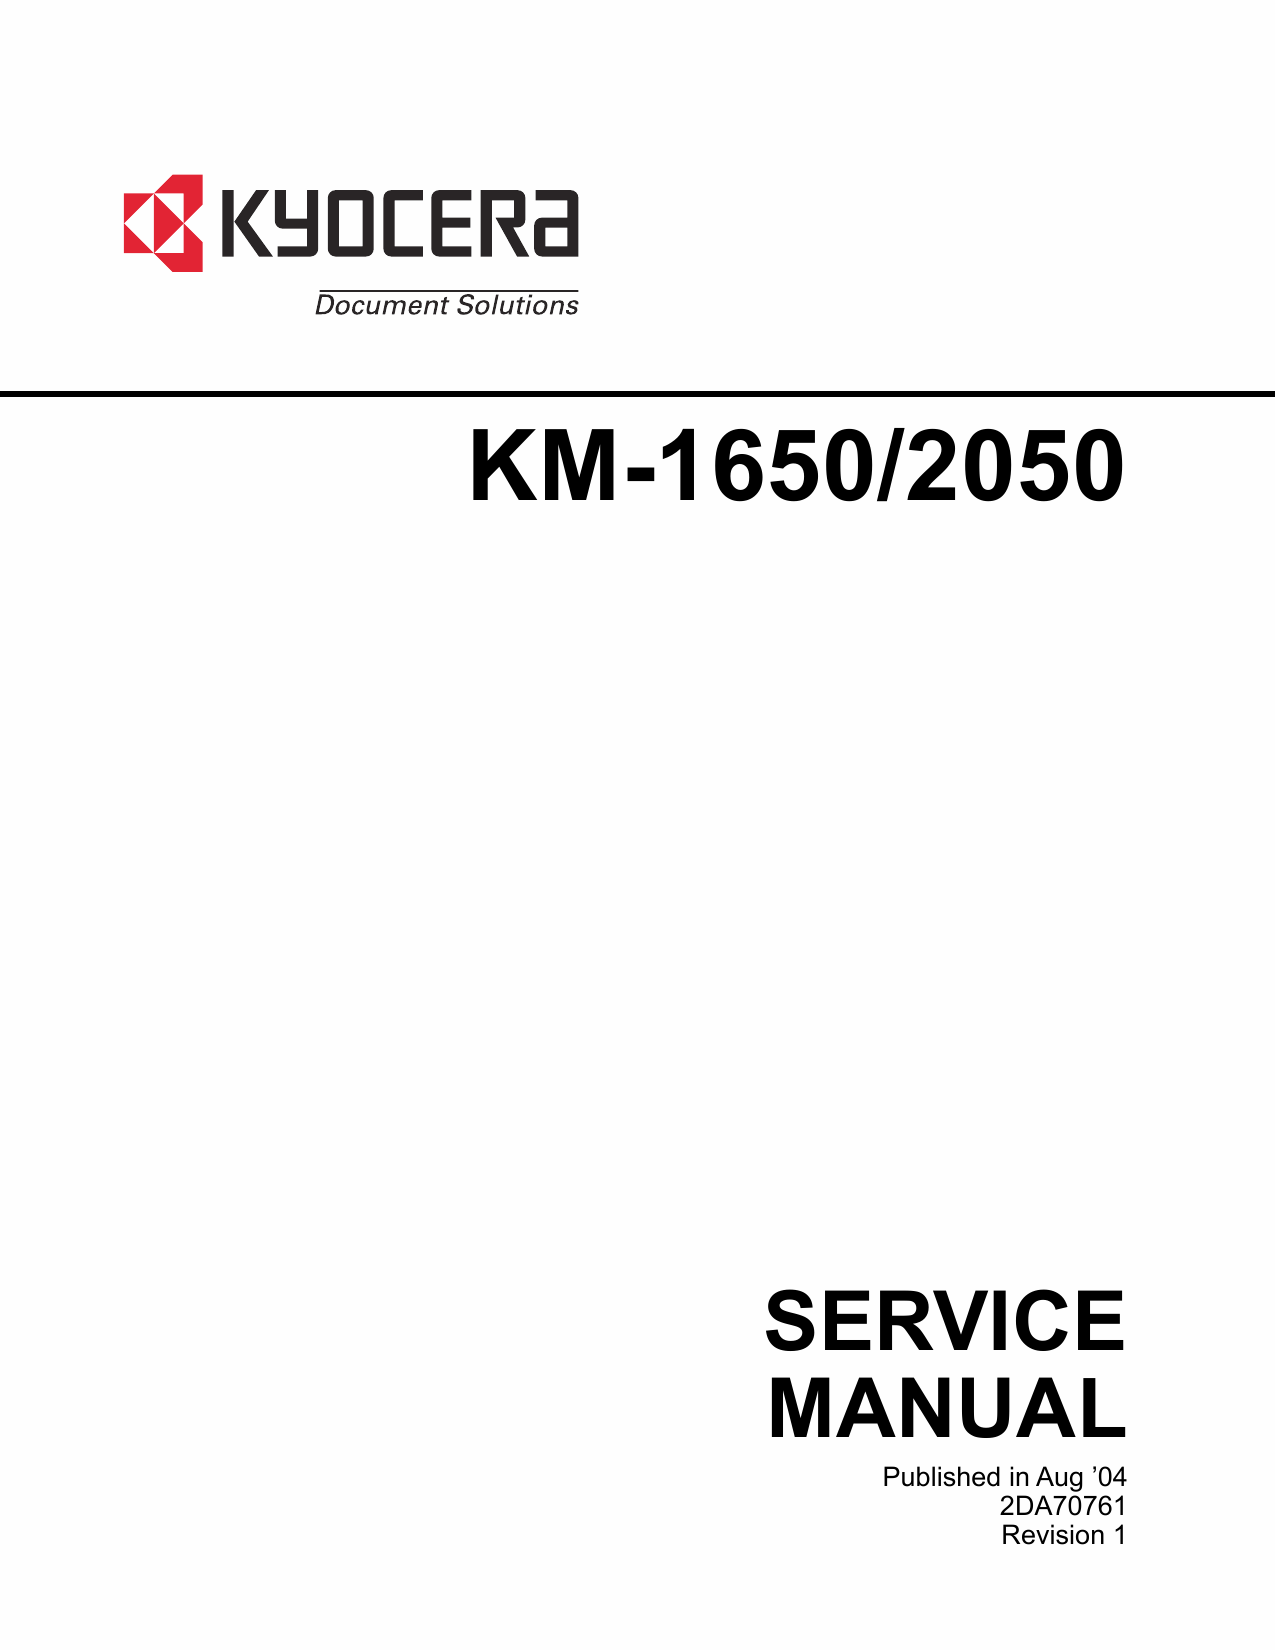 KYOCERA Copier KM-1650 2050 Parts and Service Manual-1